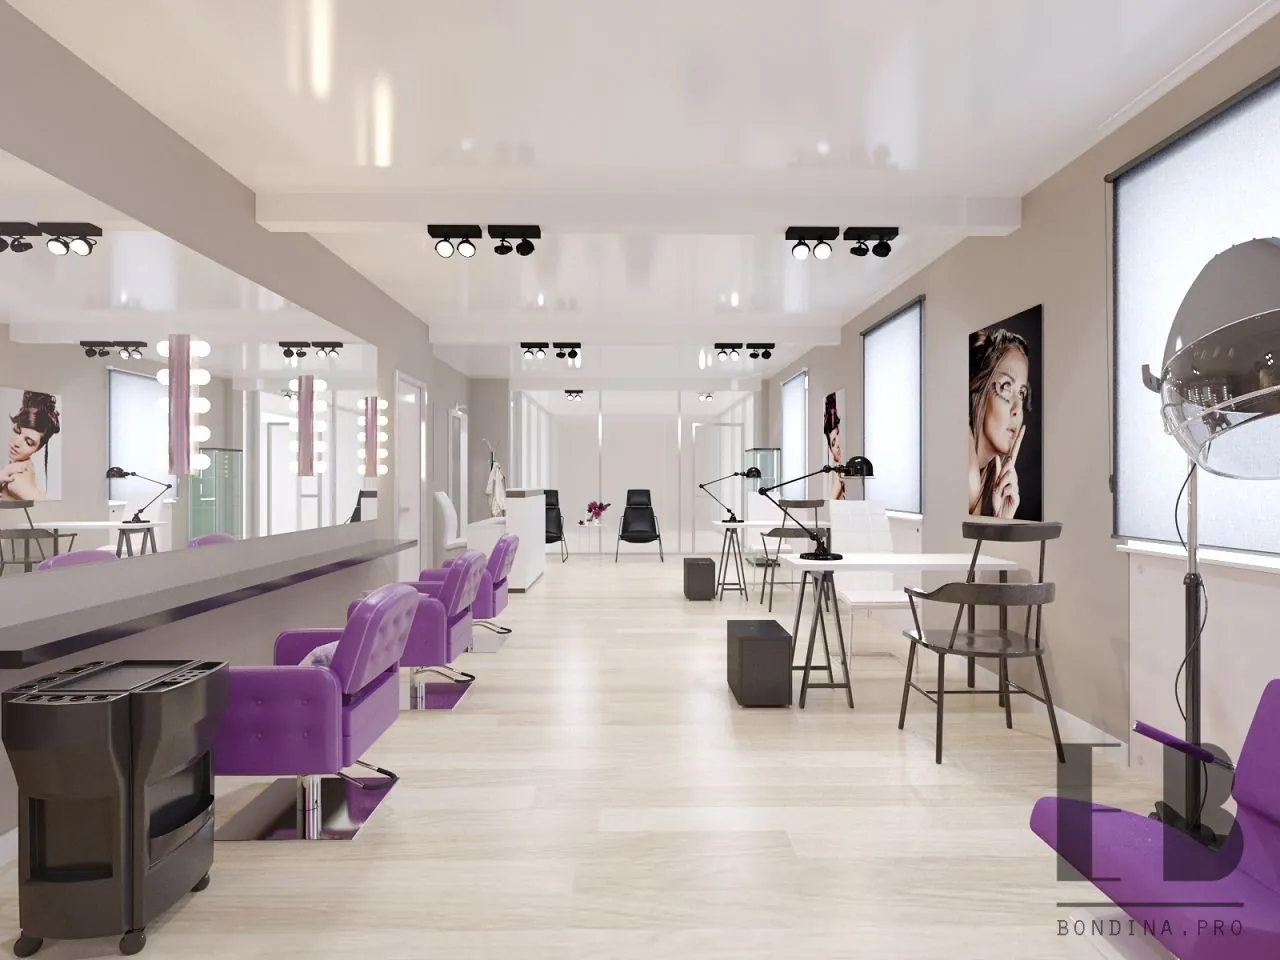 Interior design for a beauty salon